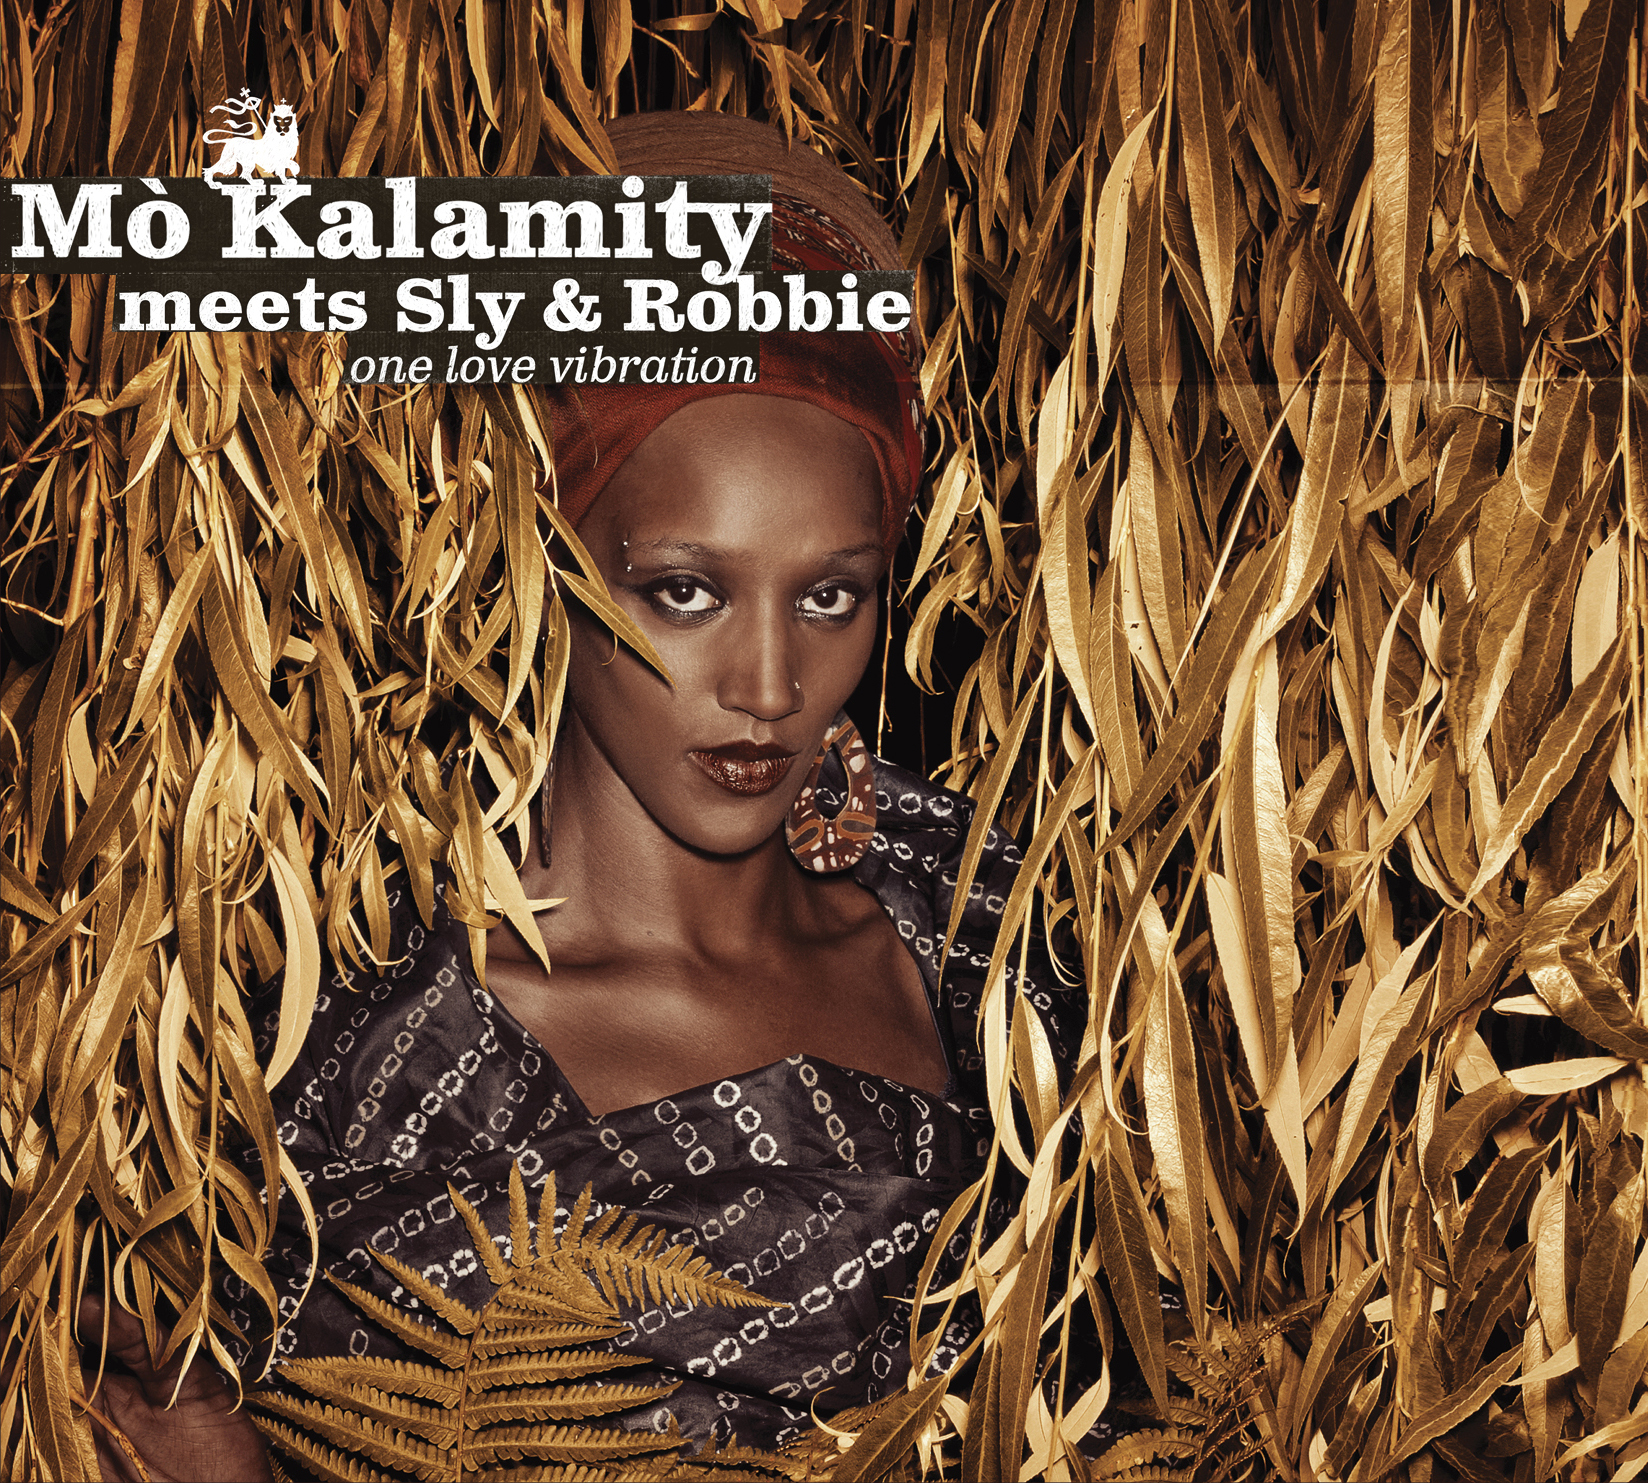 photo chronique Reggae album One Love Vibration de Mo kalamity